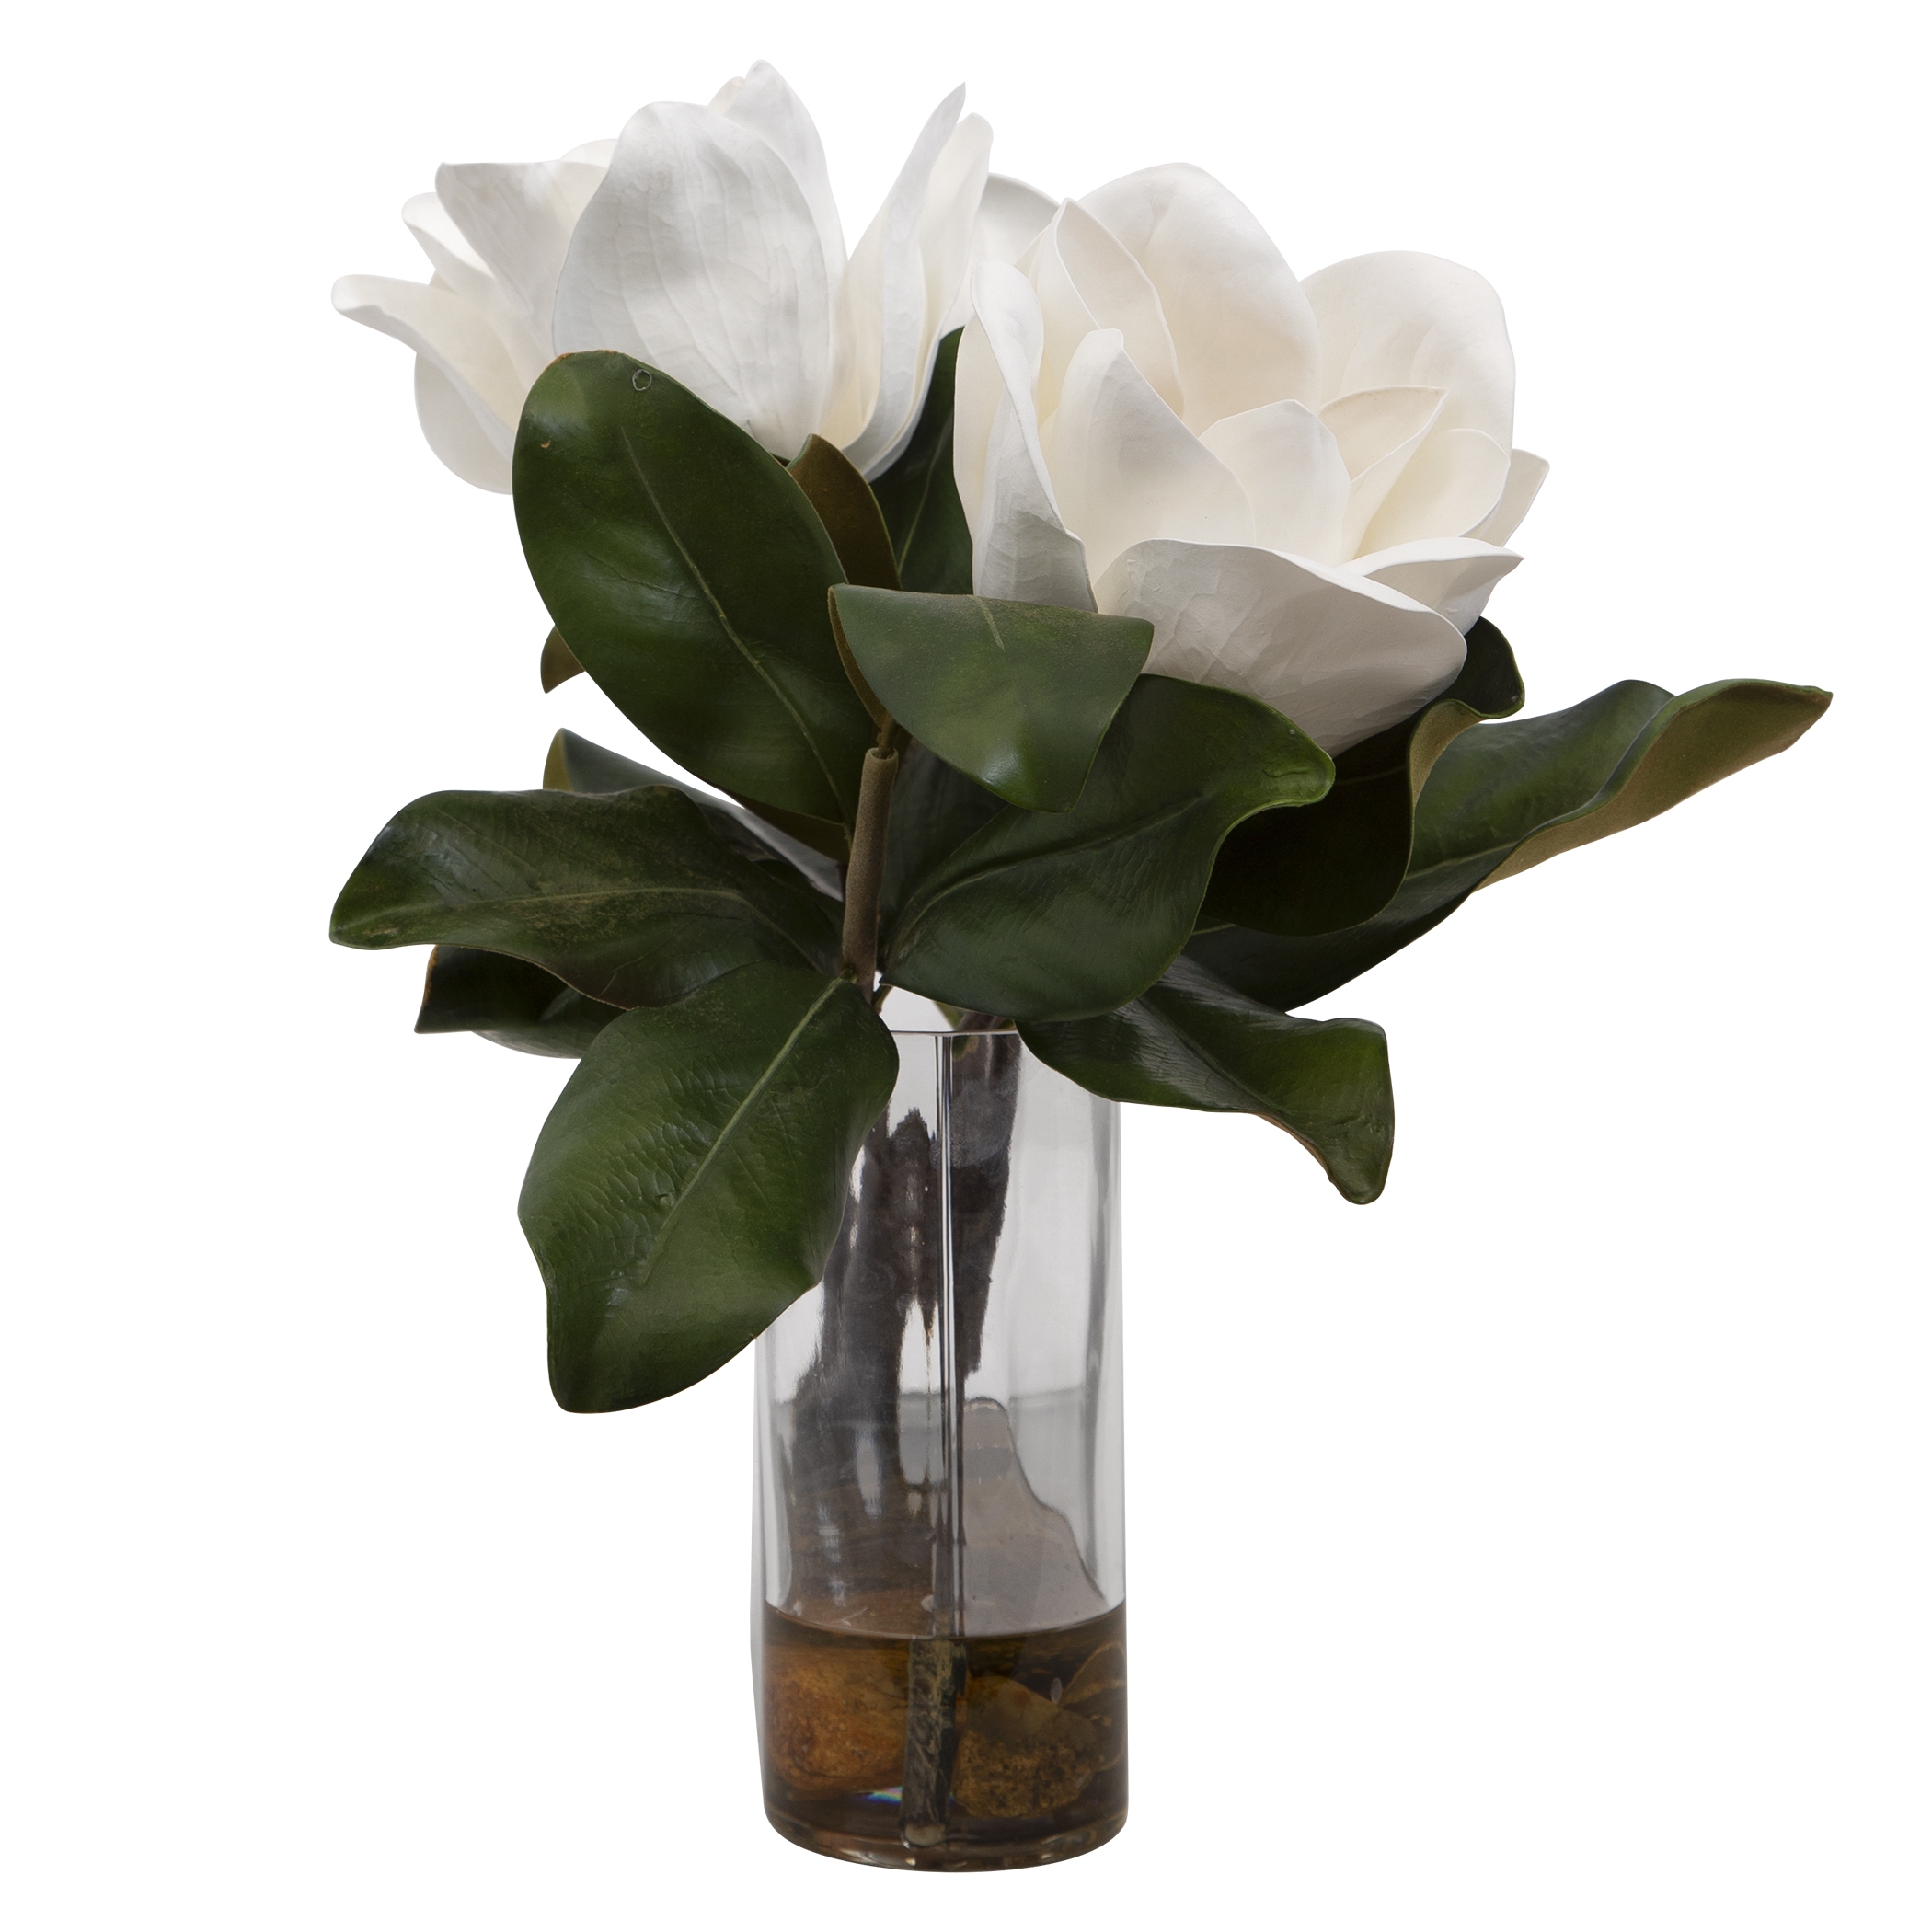 Middleton Magnolia Flower Centerpiece - Image 3